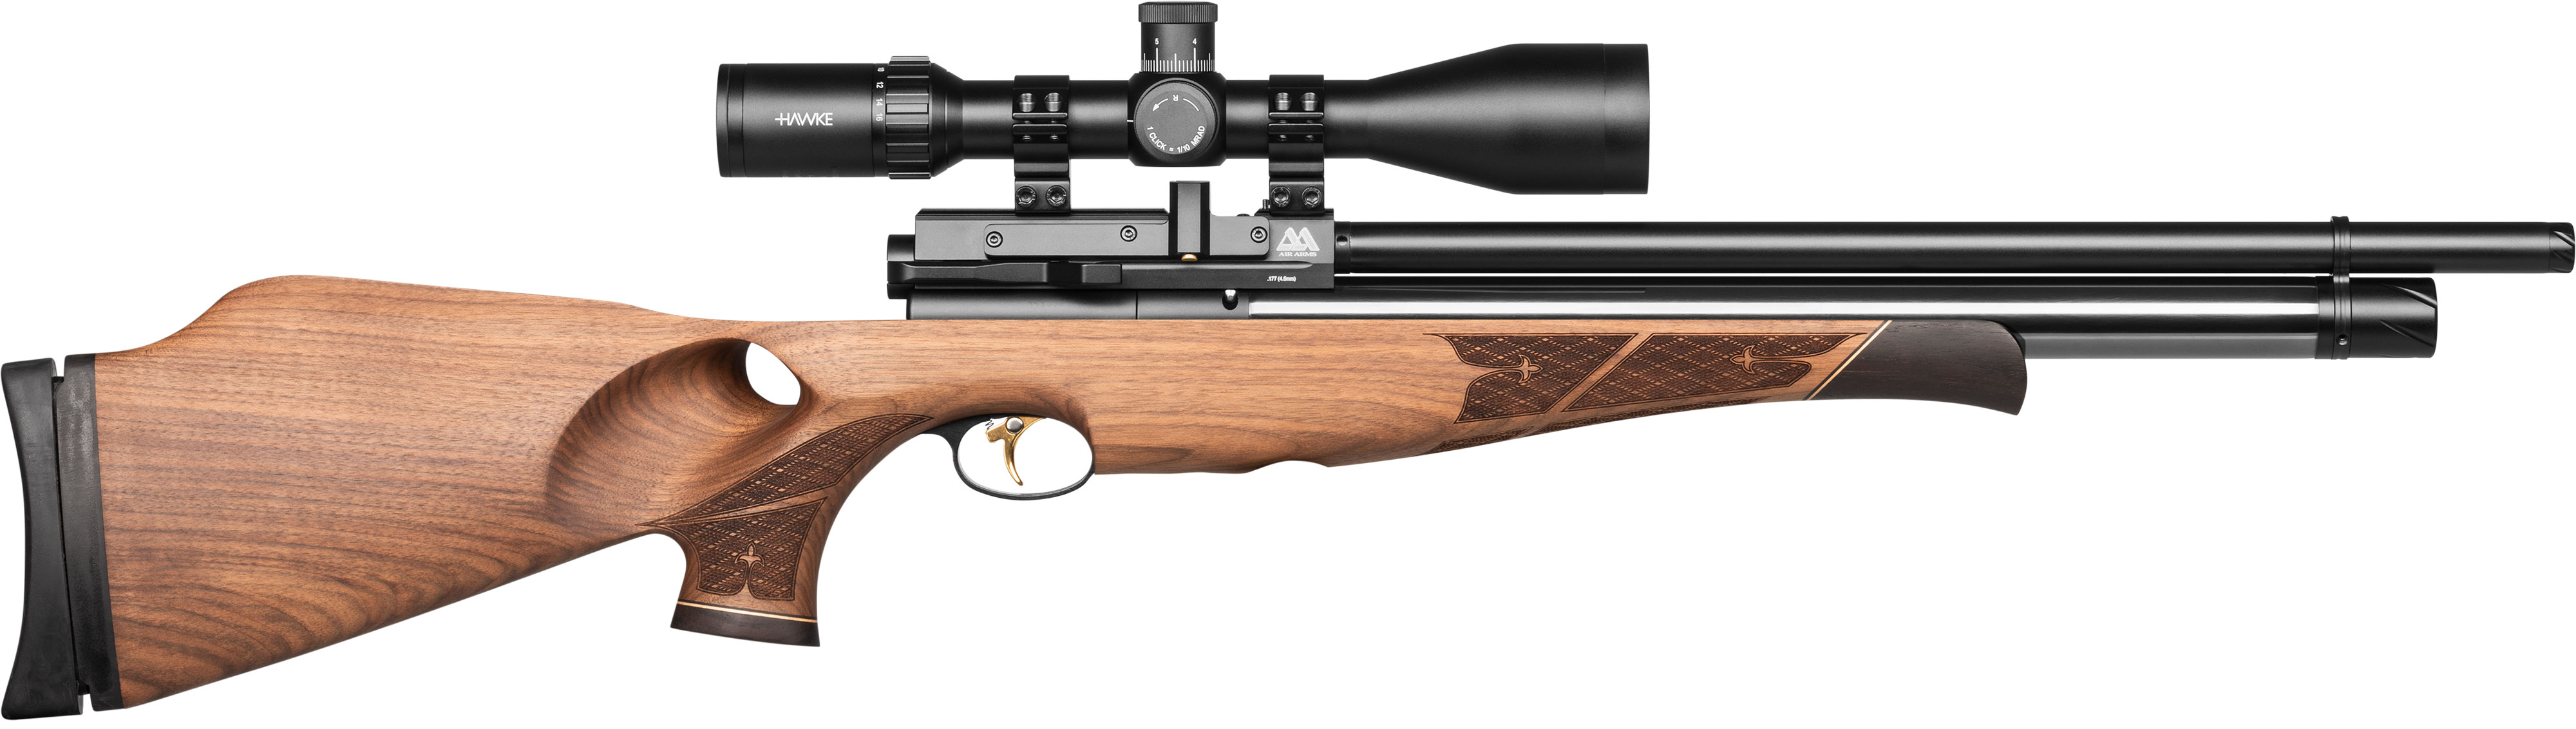 s510-carbine-pre-charged-rifle-thumbhole-2659941533.jpg